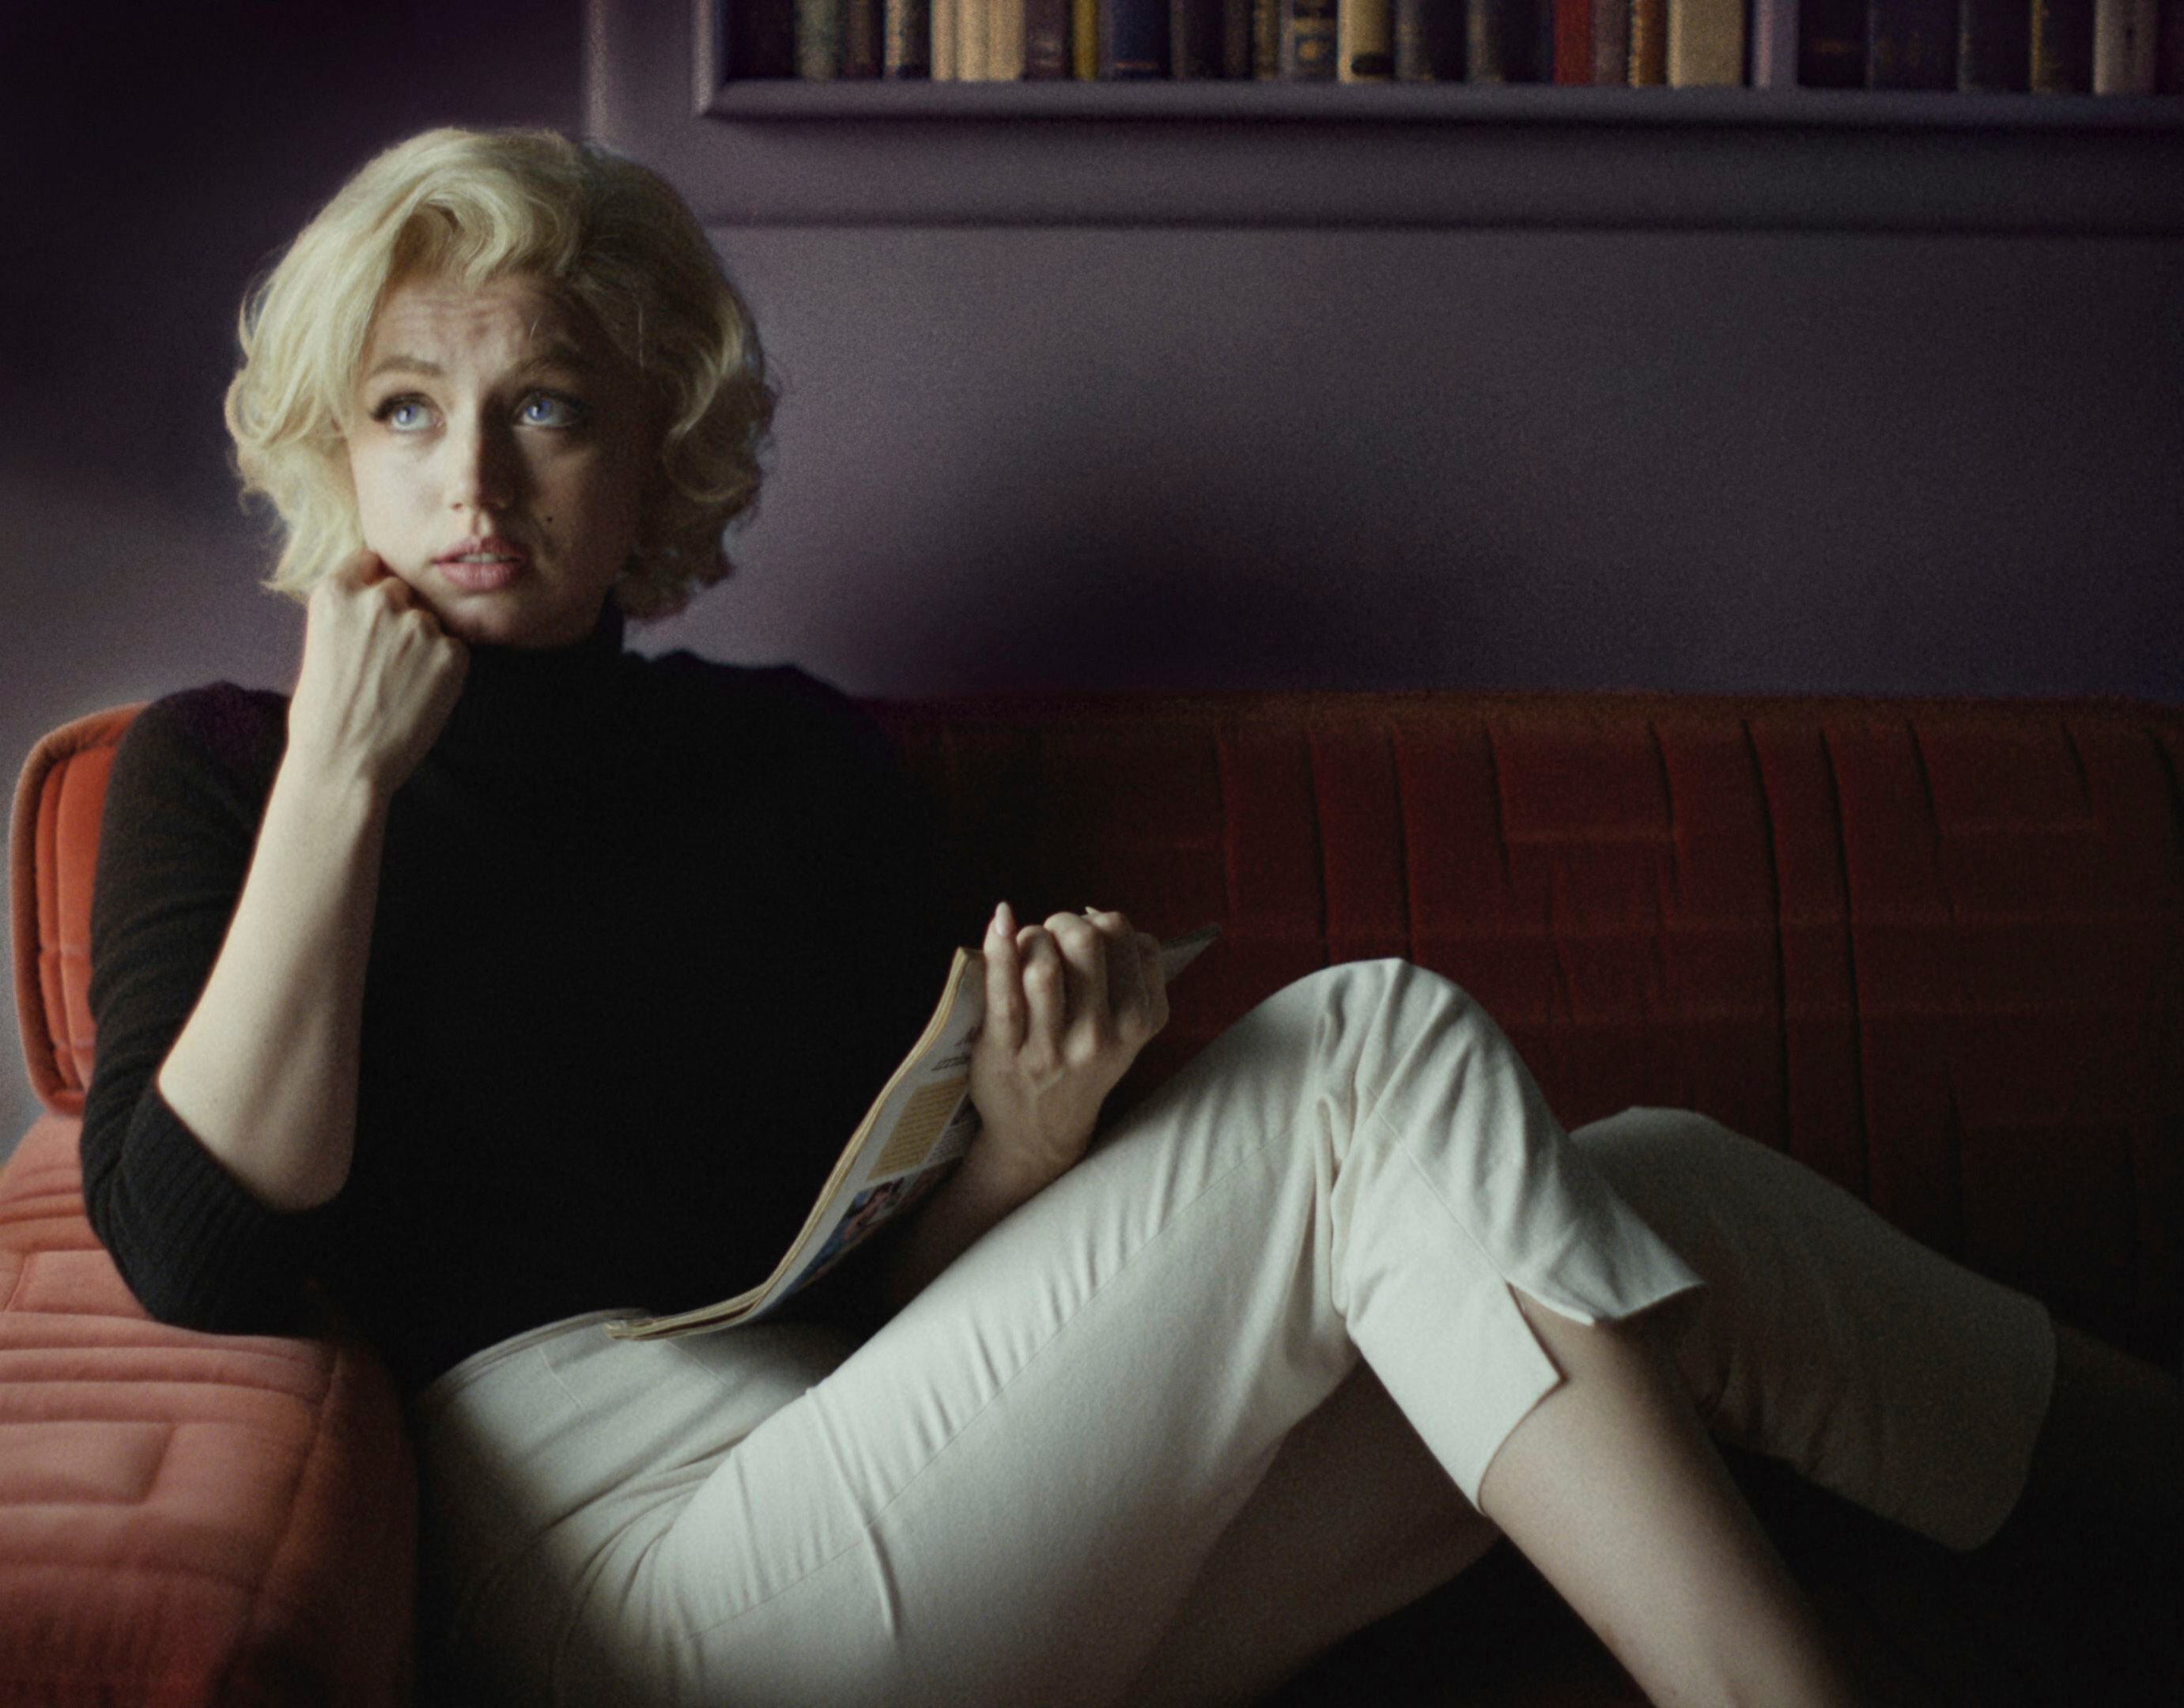 Marilyn Monroe film ‘Blonde’ arrives in Venice